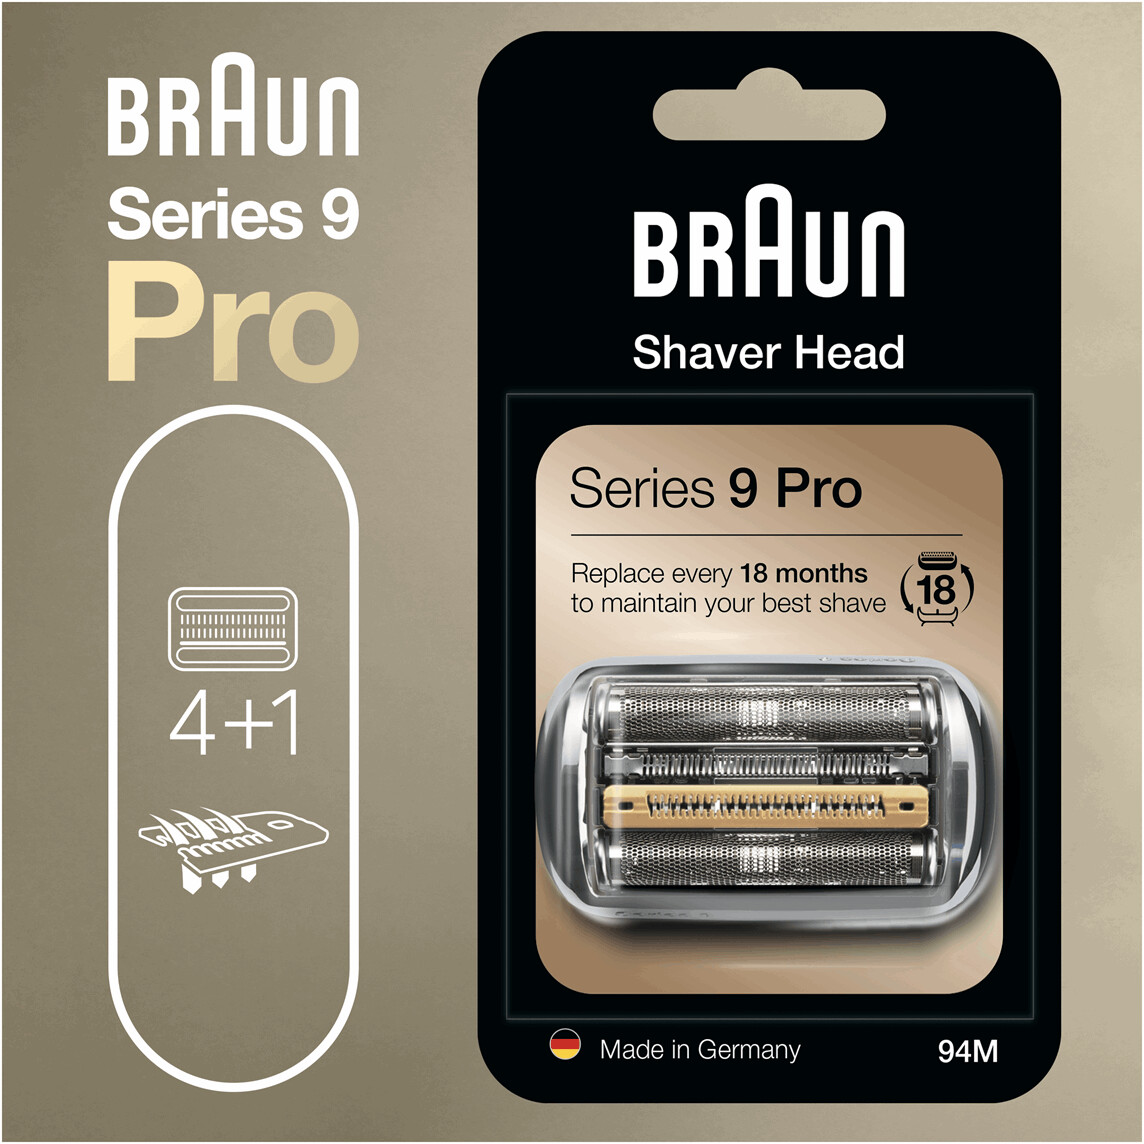 Series 2024 Pro (Februar Braun ab 9 43,90 | 94M bei € Preisvergleich Preise)